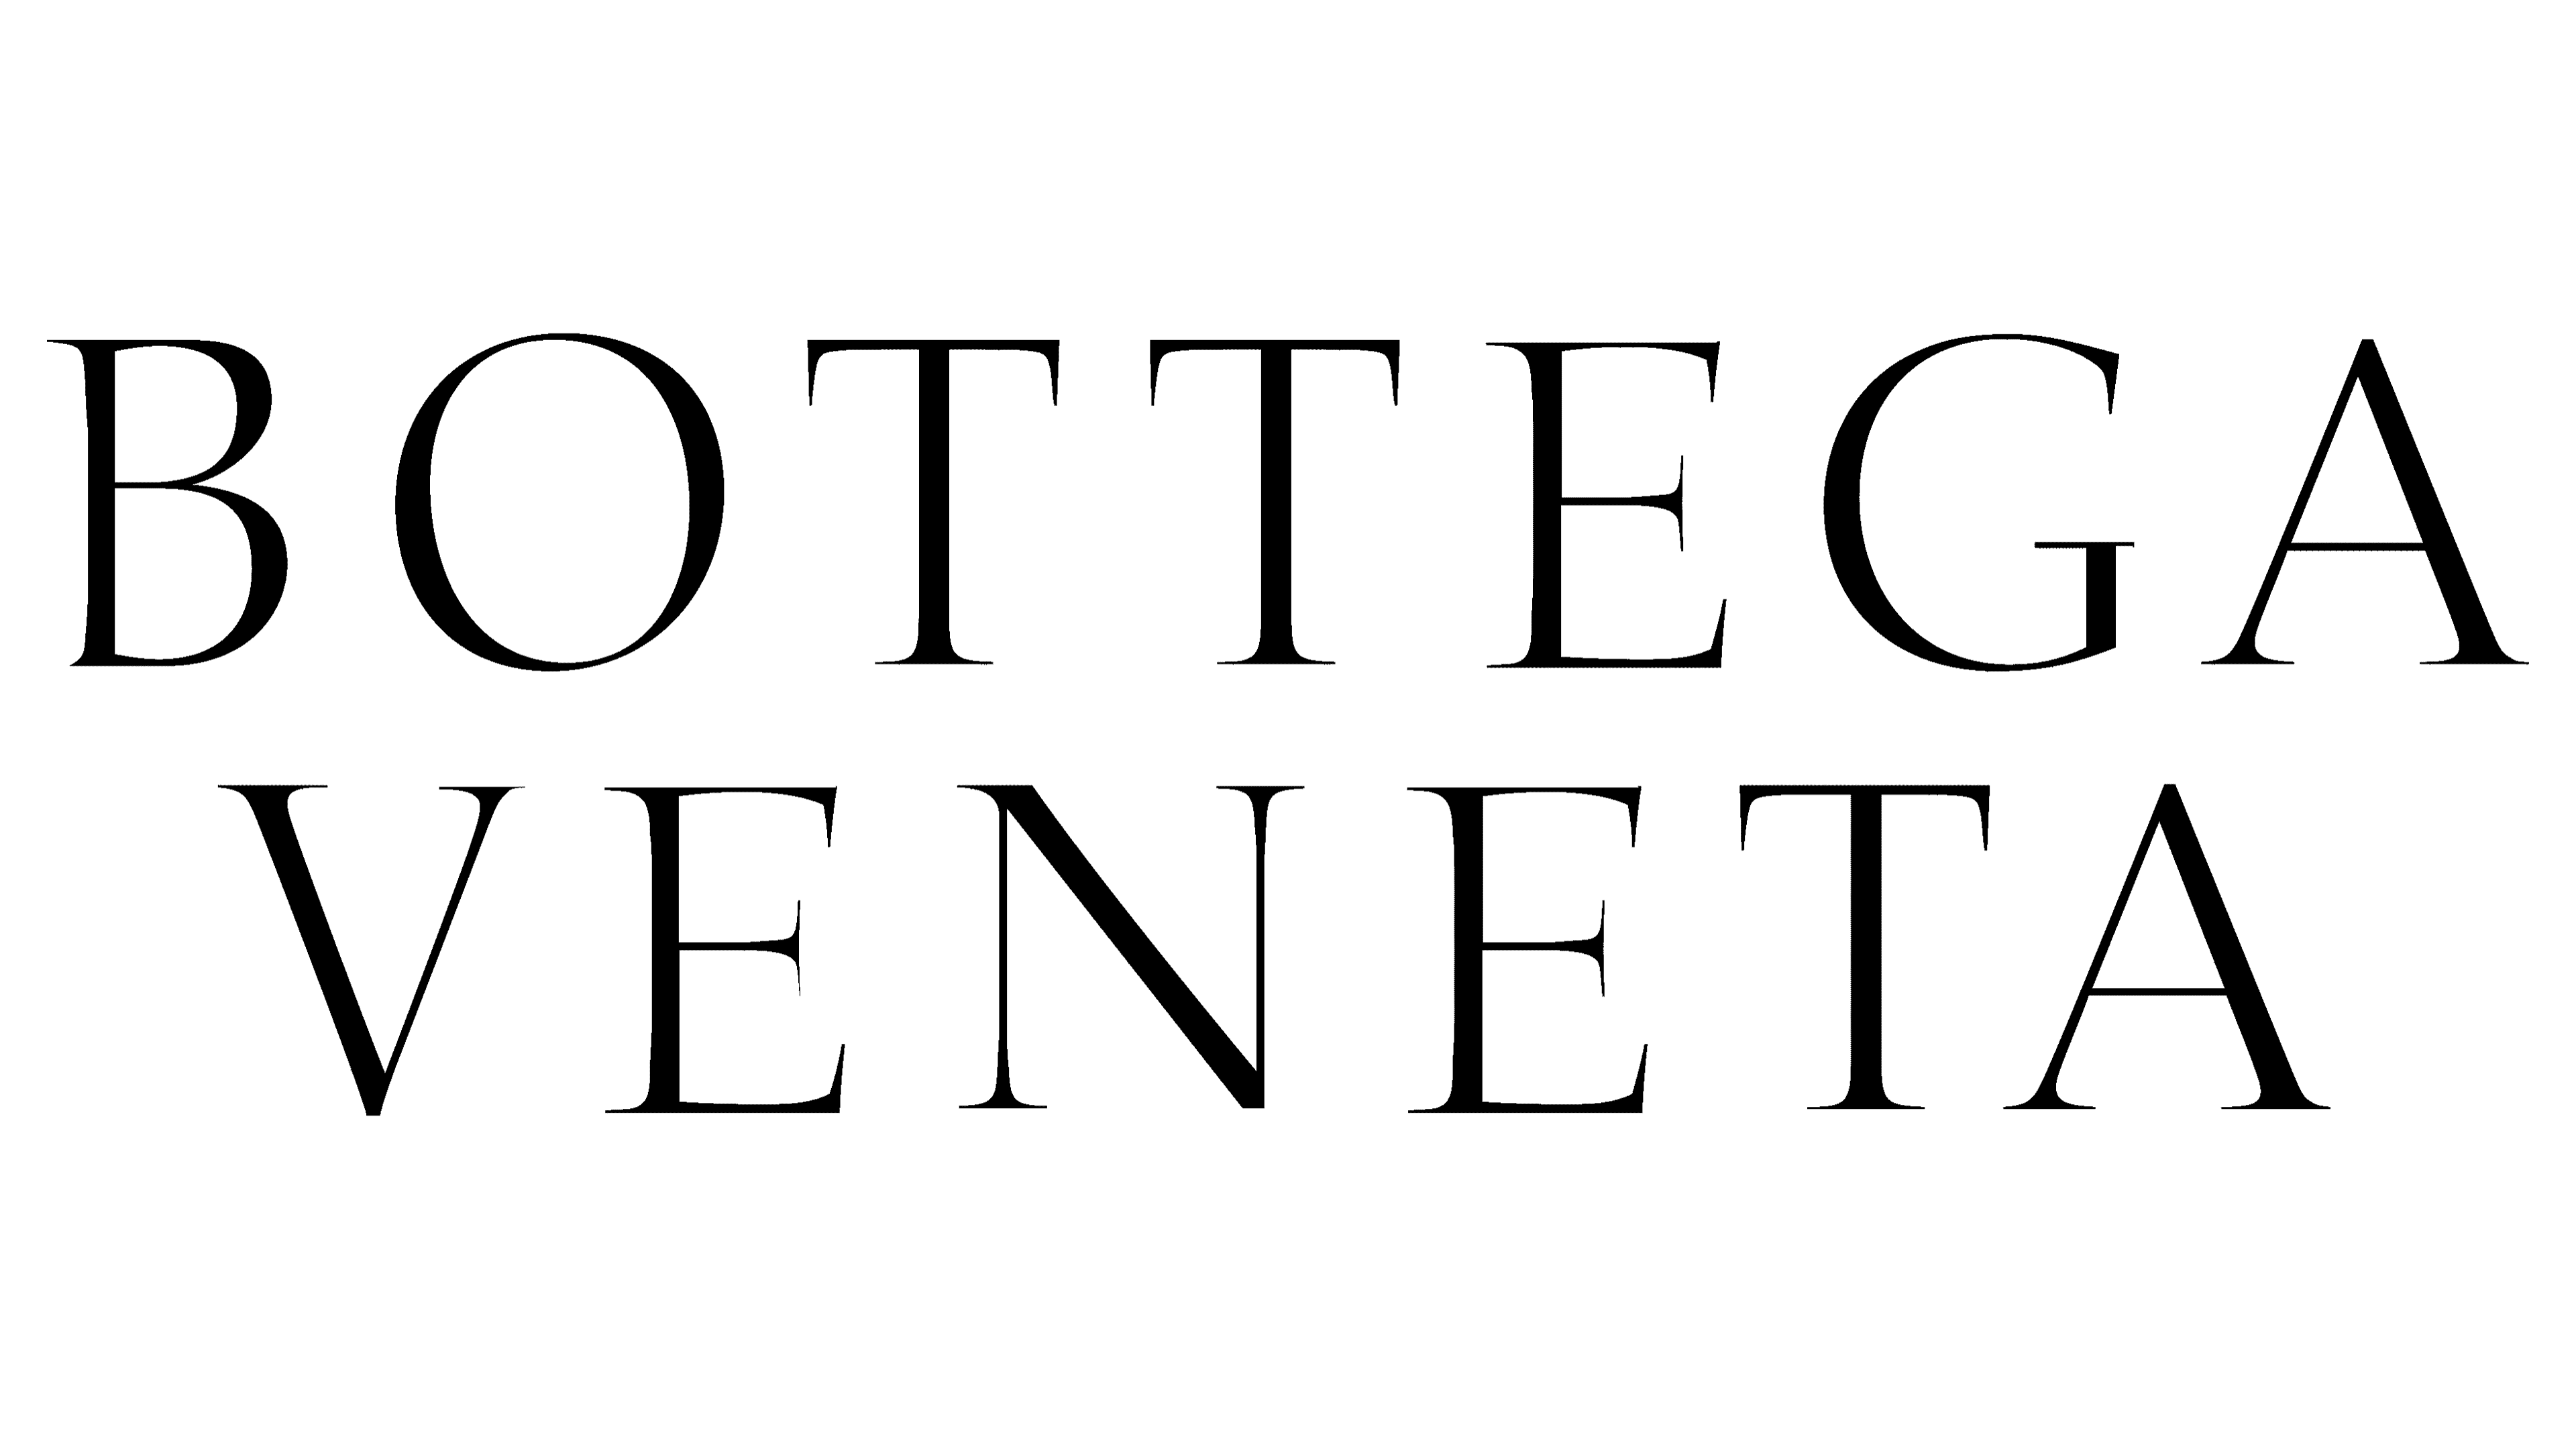 File:Bottega Veneta logo 3.jpg - Wikipedia